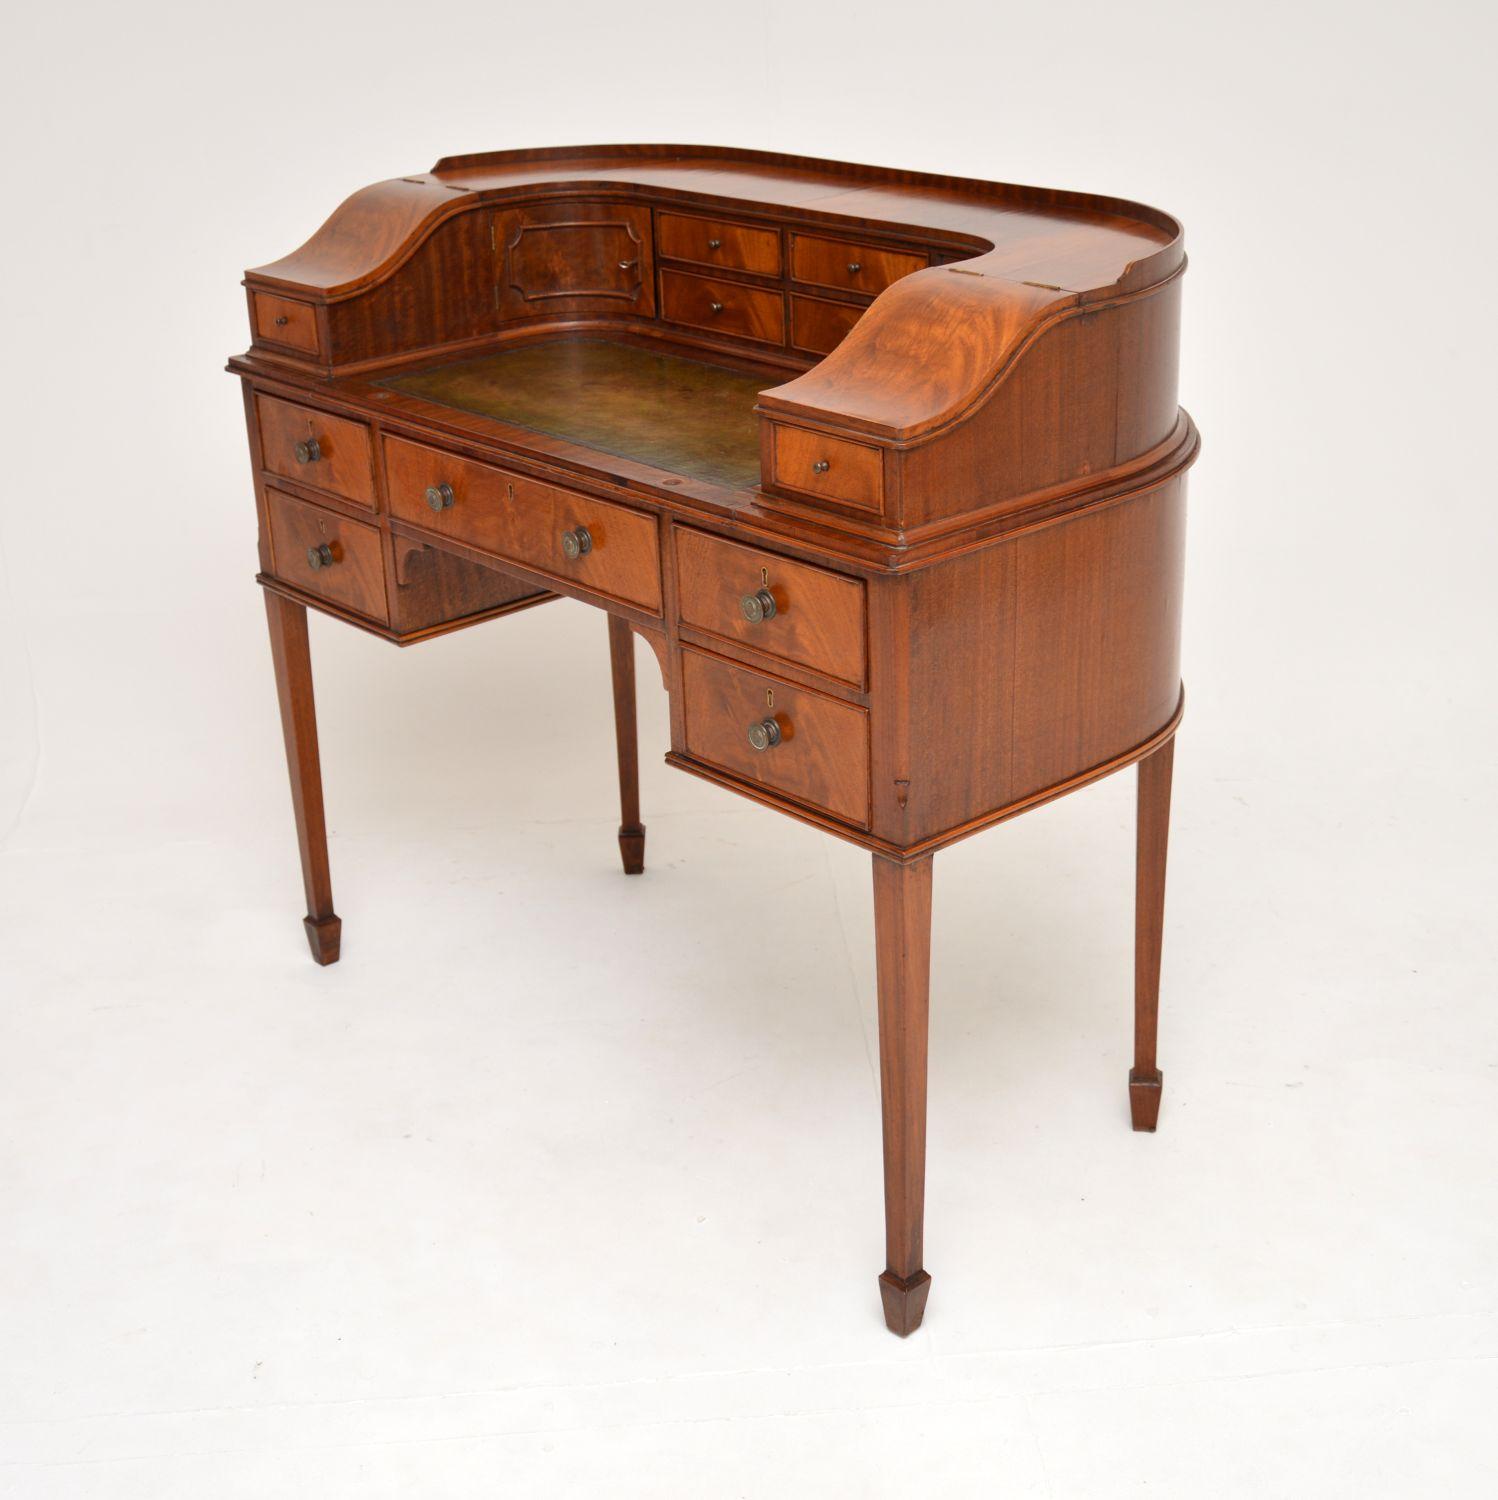 British Antique Leather Top Carlton House Desk